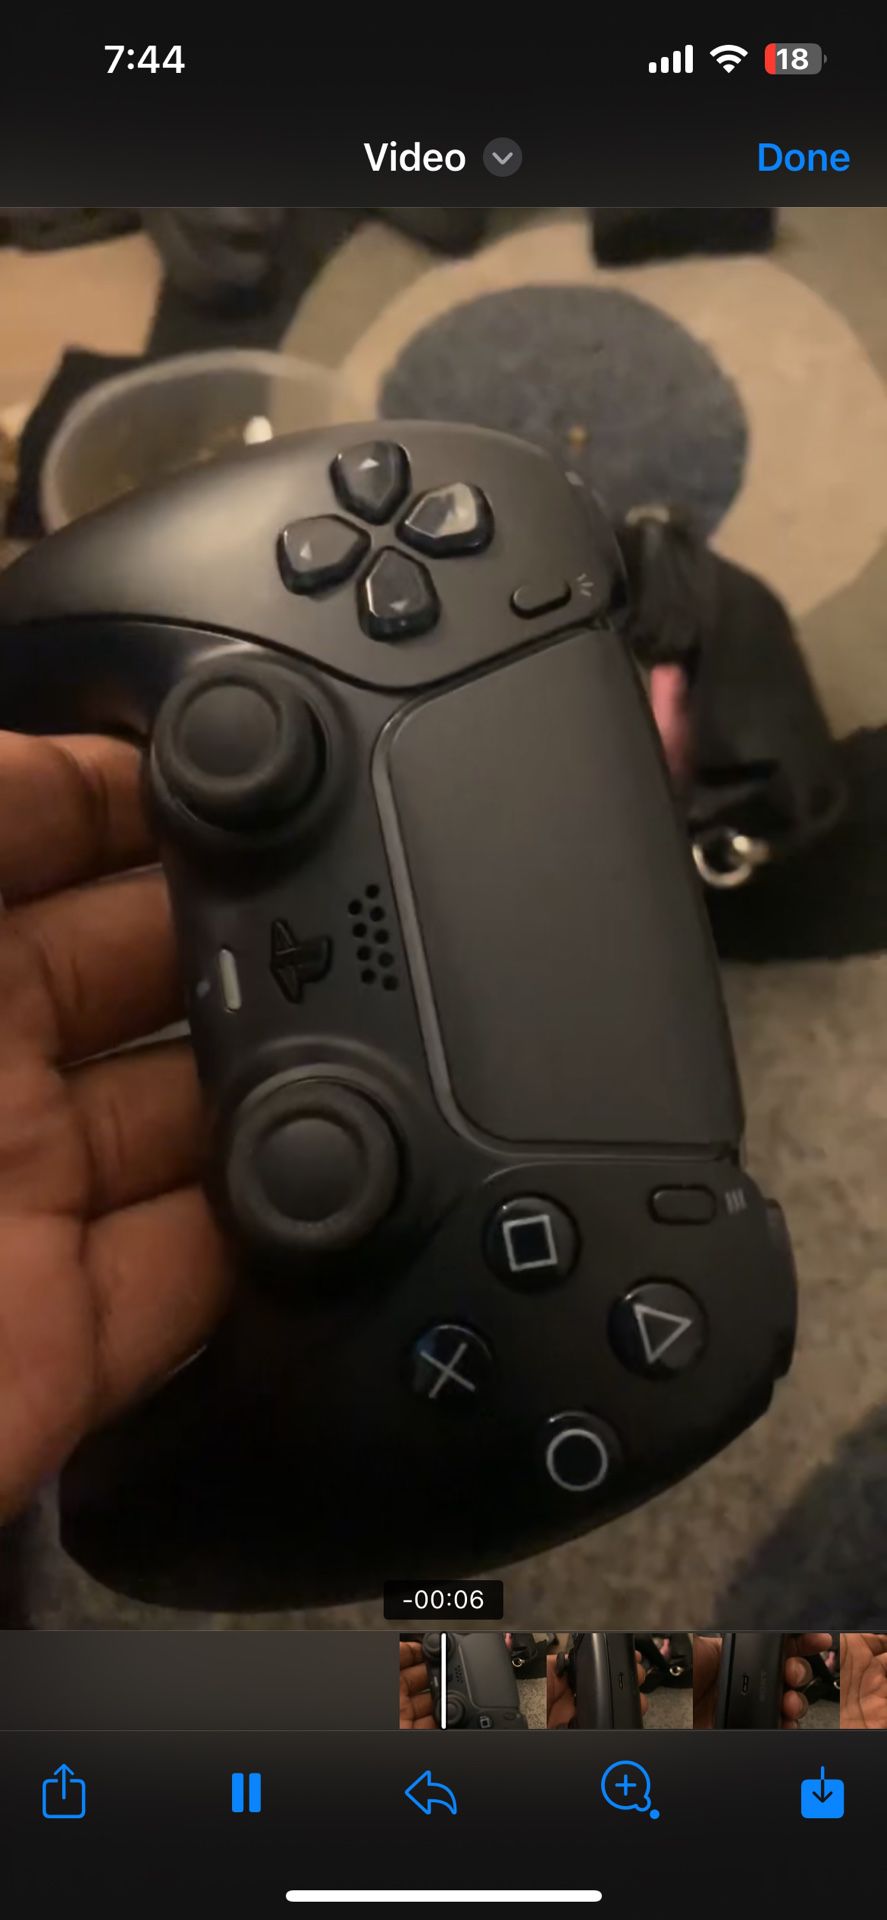 Black PlayStation Controller 